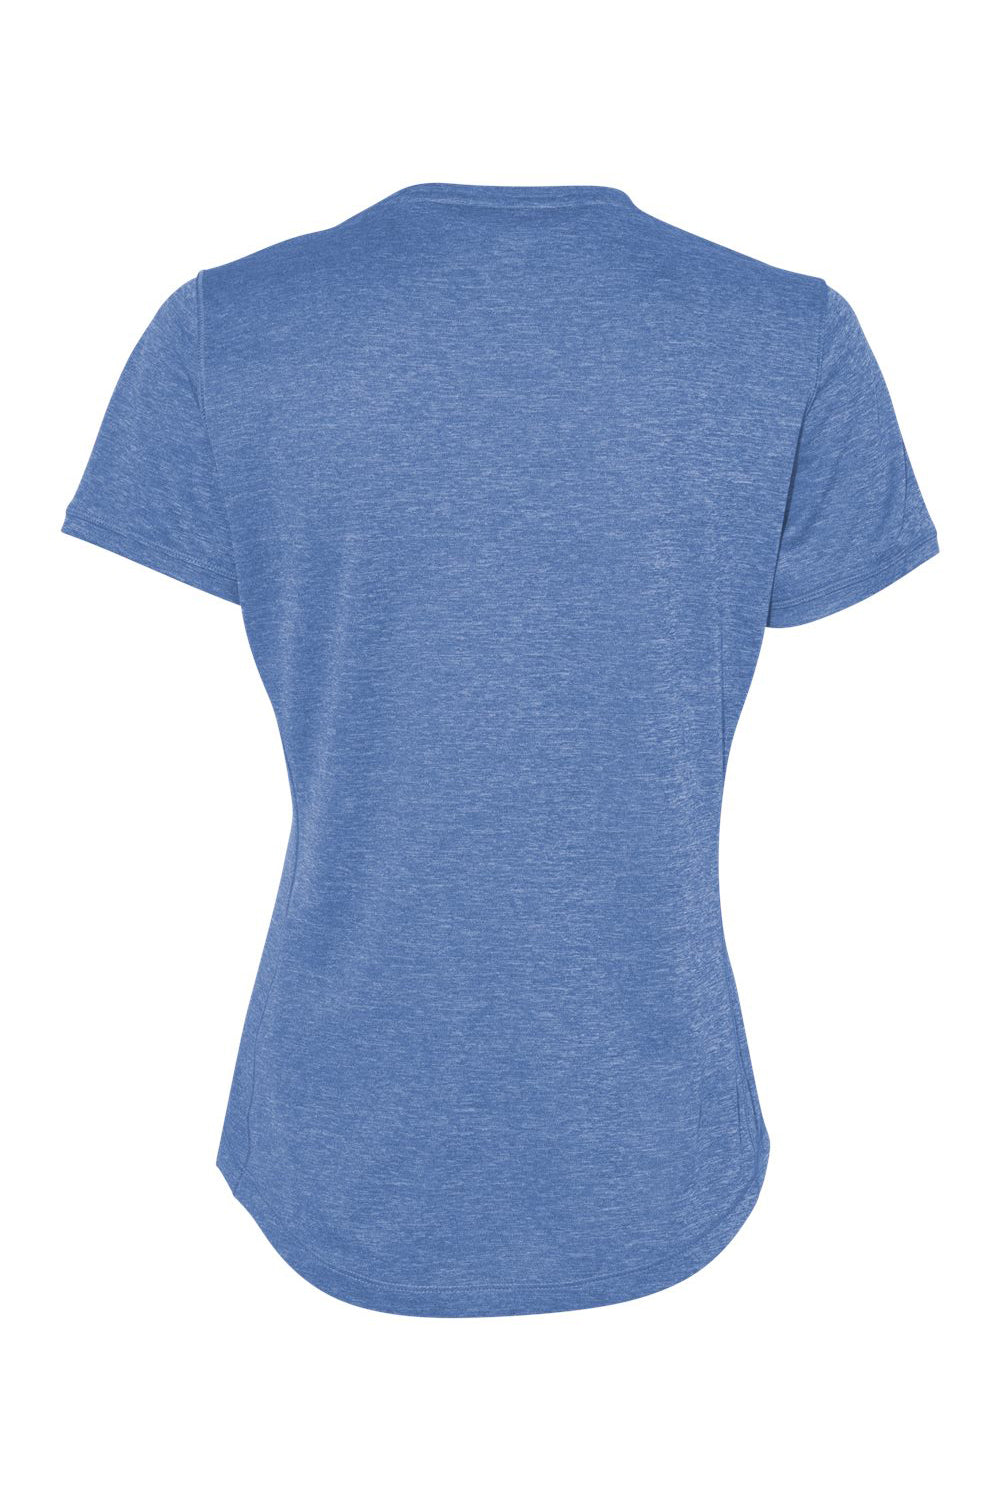 Adidas A377 Womens Short Sleeve Crewneck T-Shirt Heather Collegiate Royal Blue Flat Back